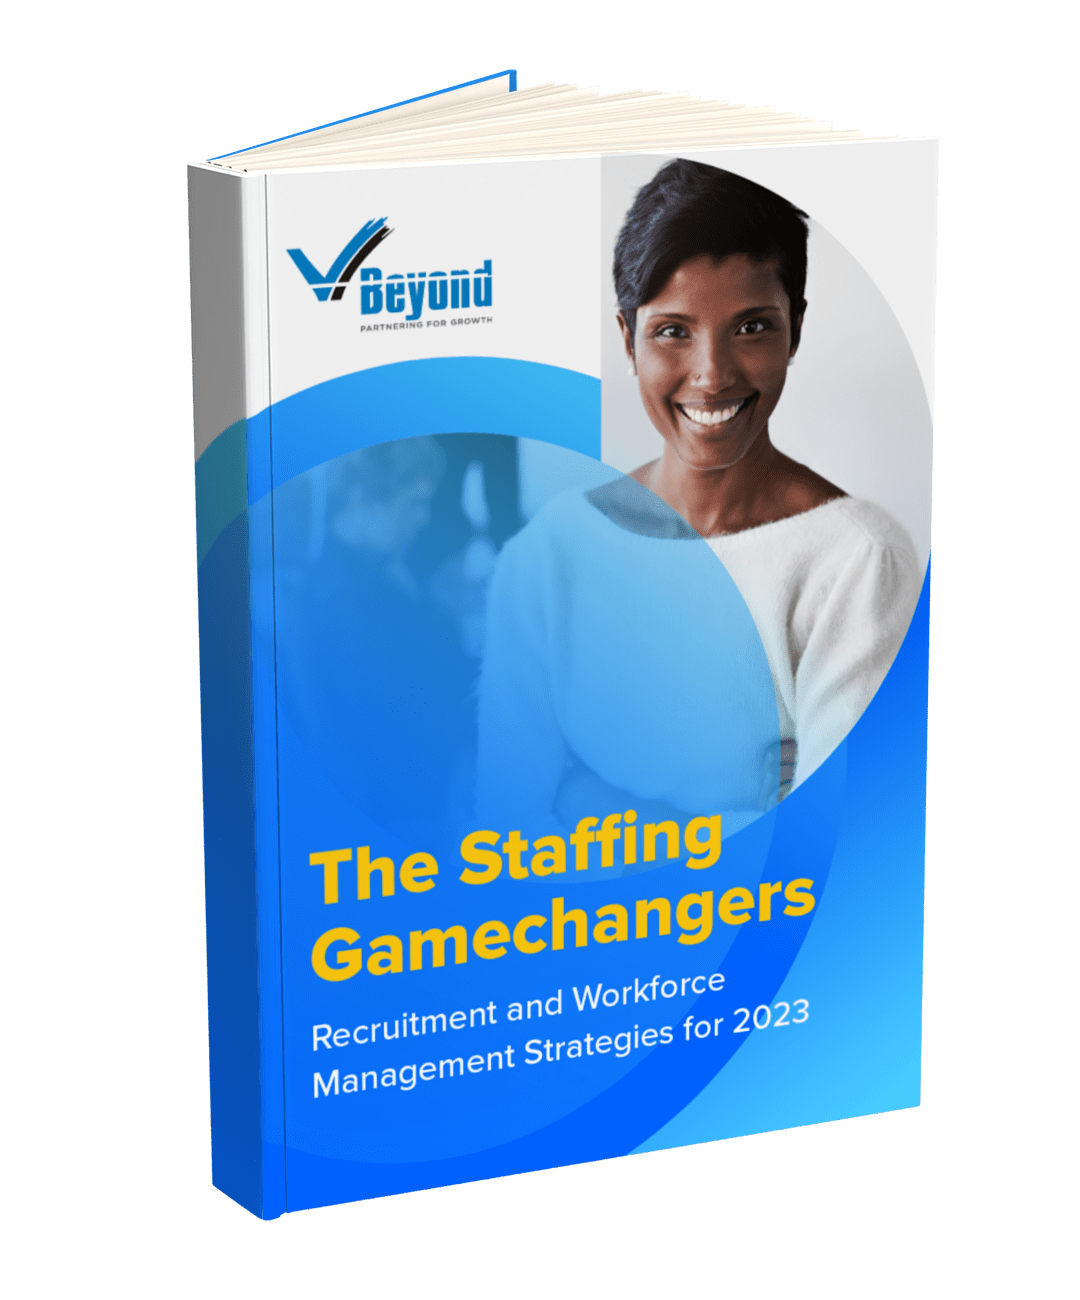 Recruitment and Workforce Management Strategies